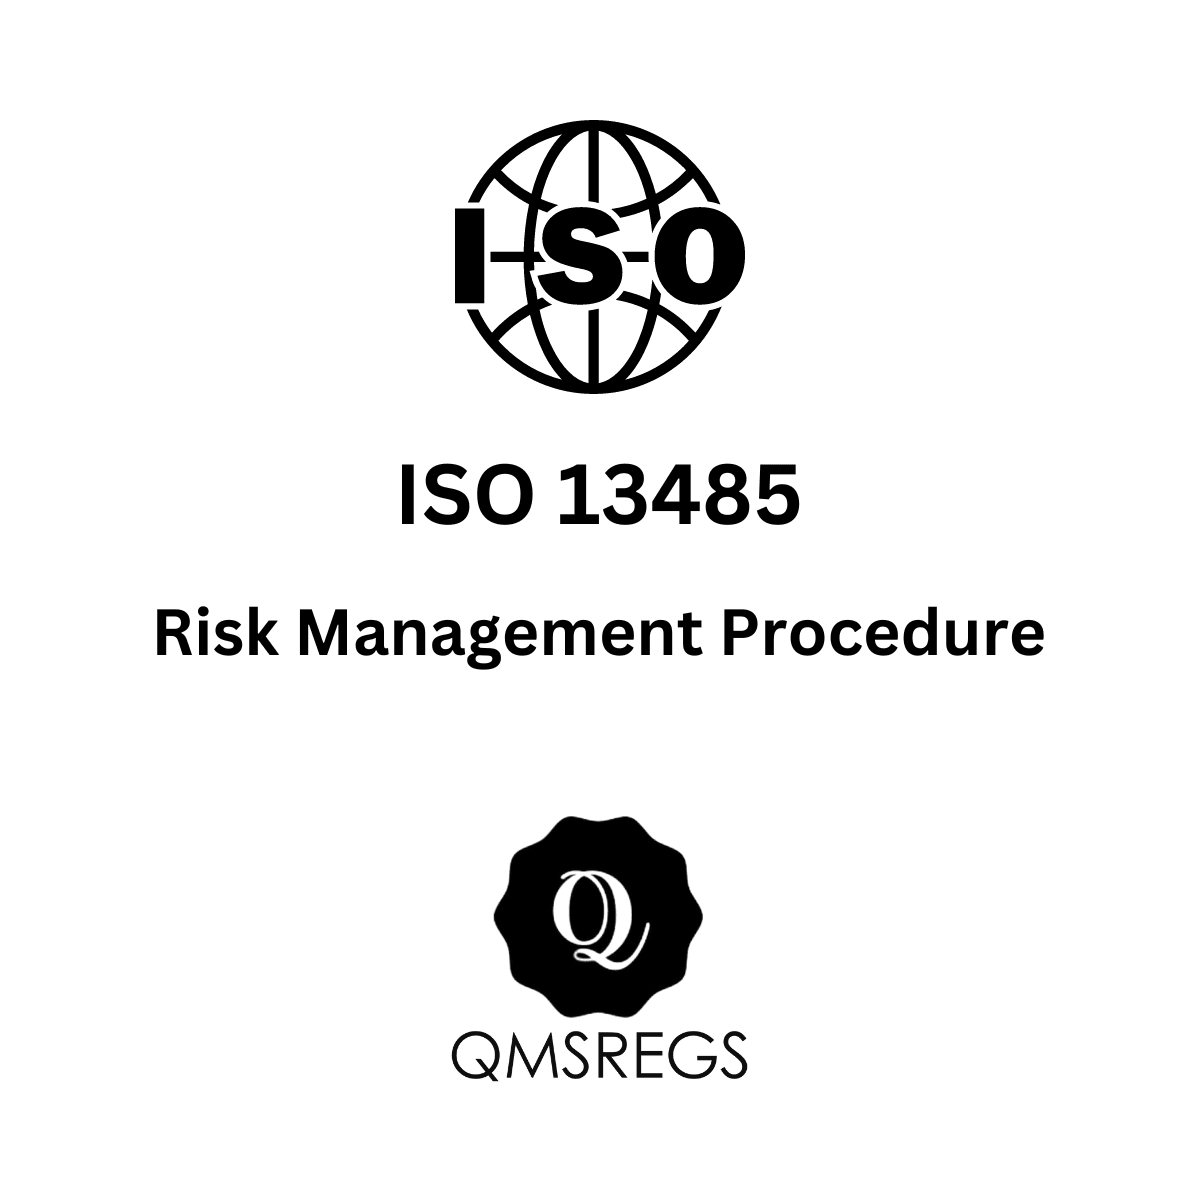 ISO 13485 Risk Management Procedure Template